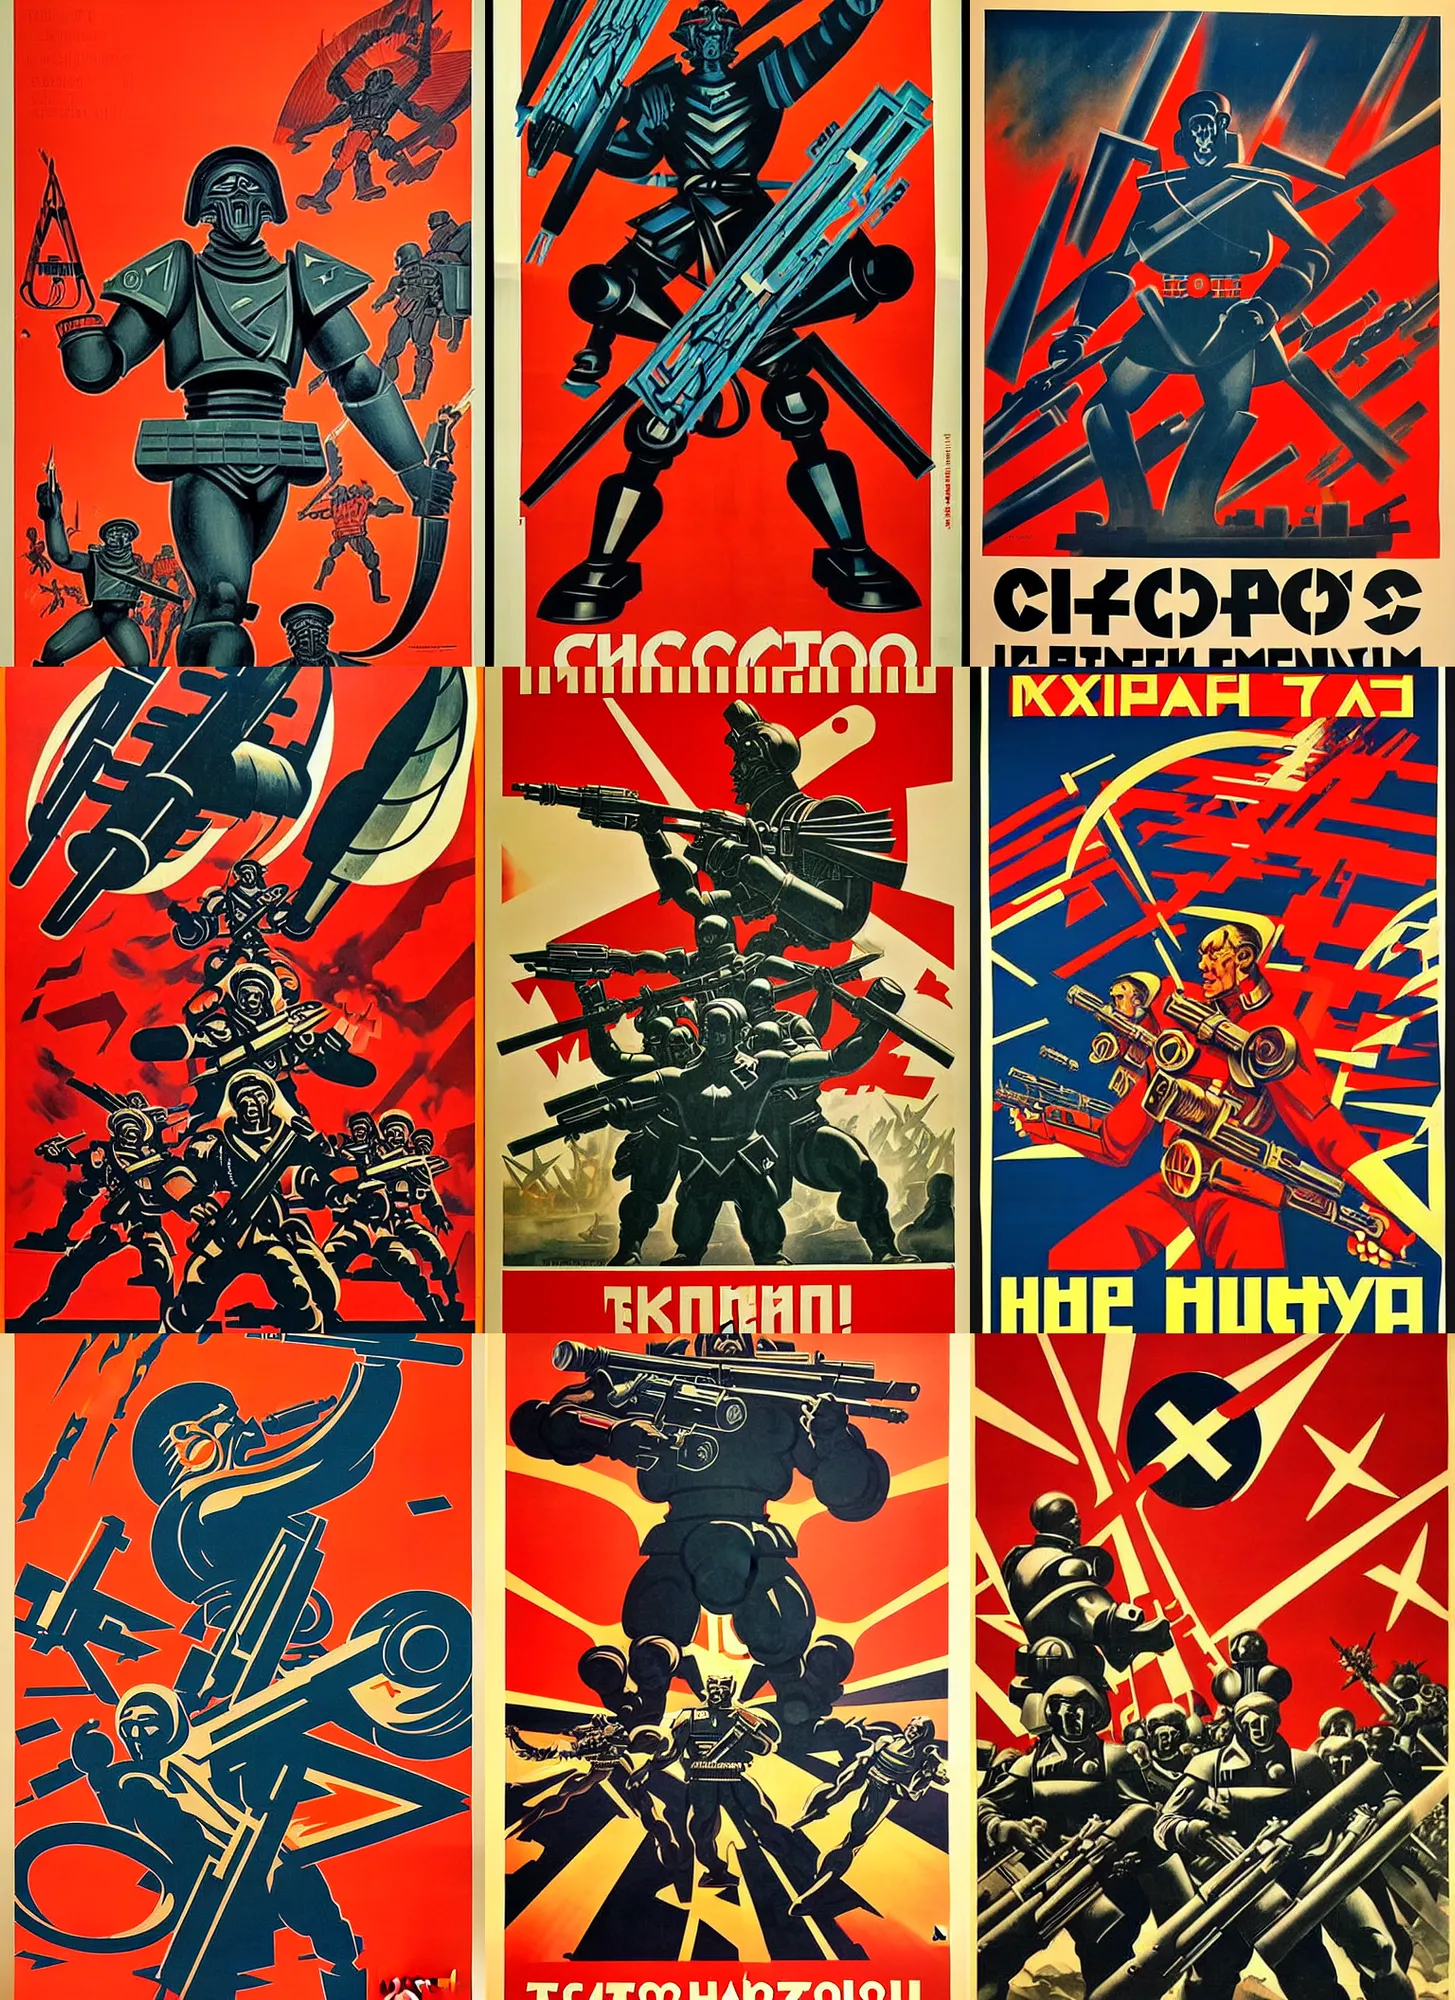 Prompt: soviet propaganda poster of chaos from t'au empire, socialist realism. by alexander zelensky, viktor deni, havrylo pustoviyt